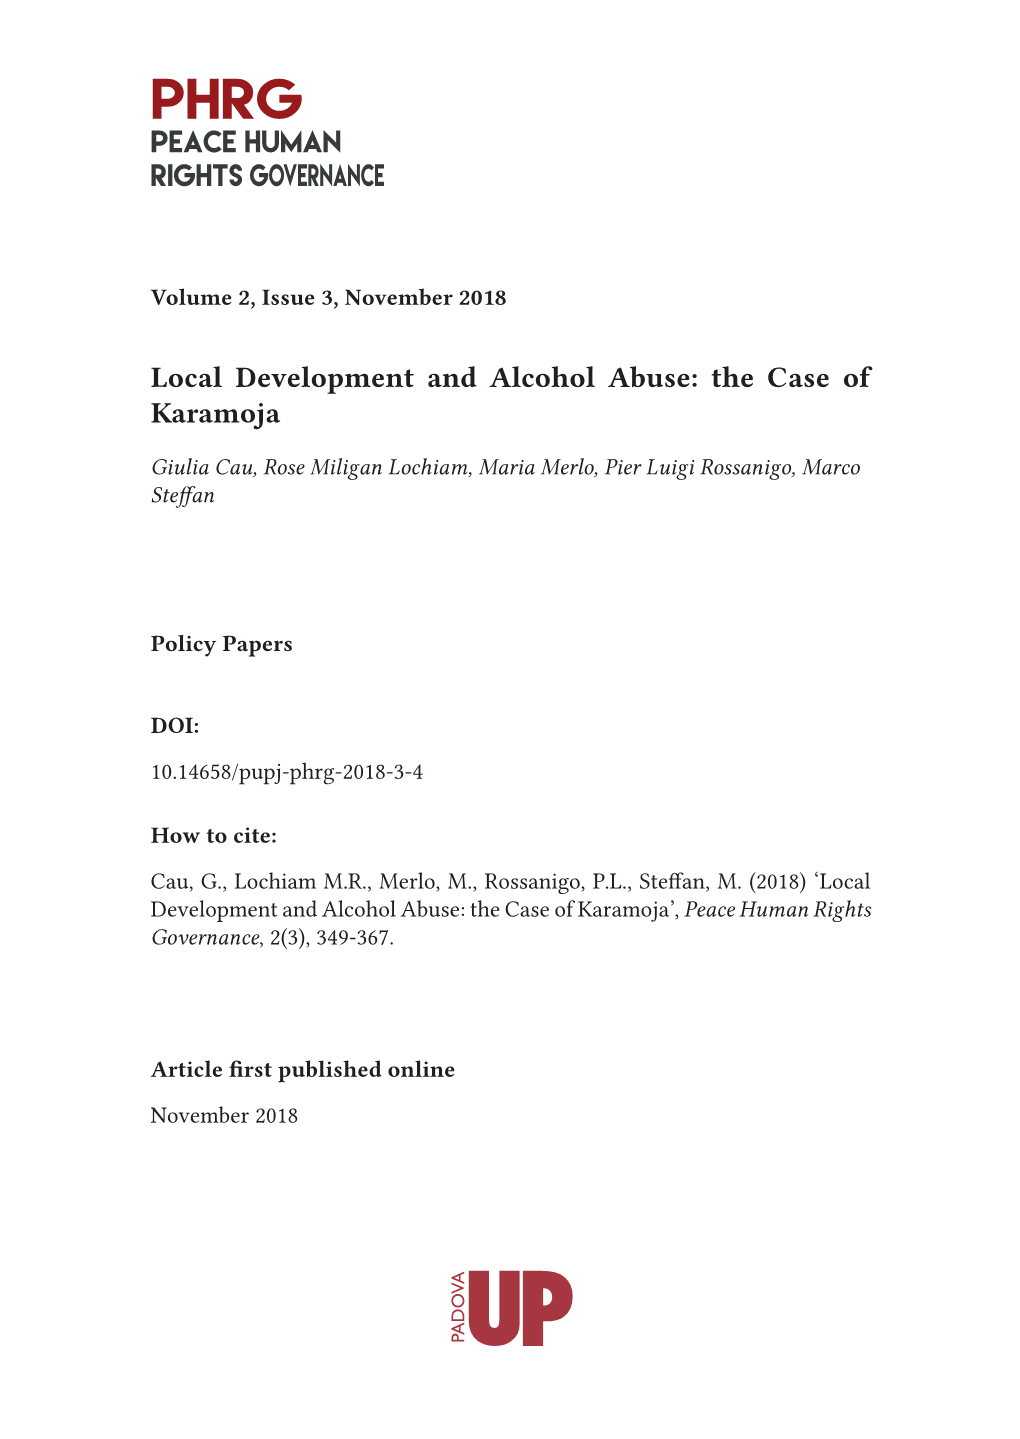 Local Development and Alcohol Abuse: the Case of Karamoja